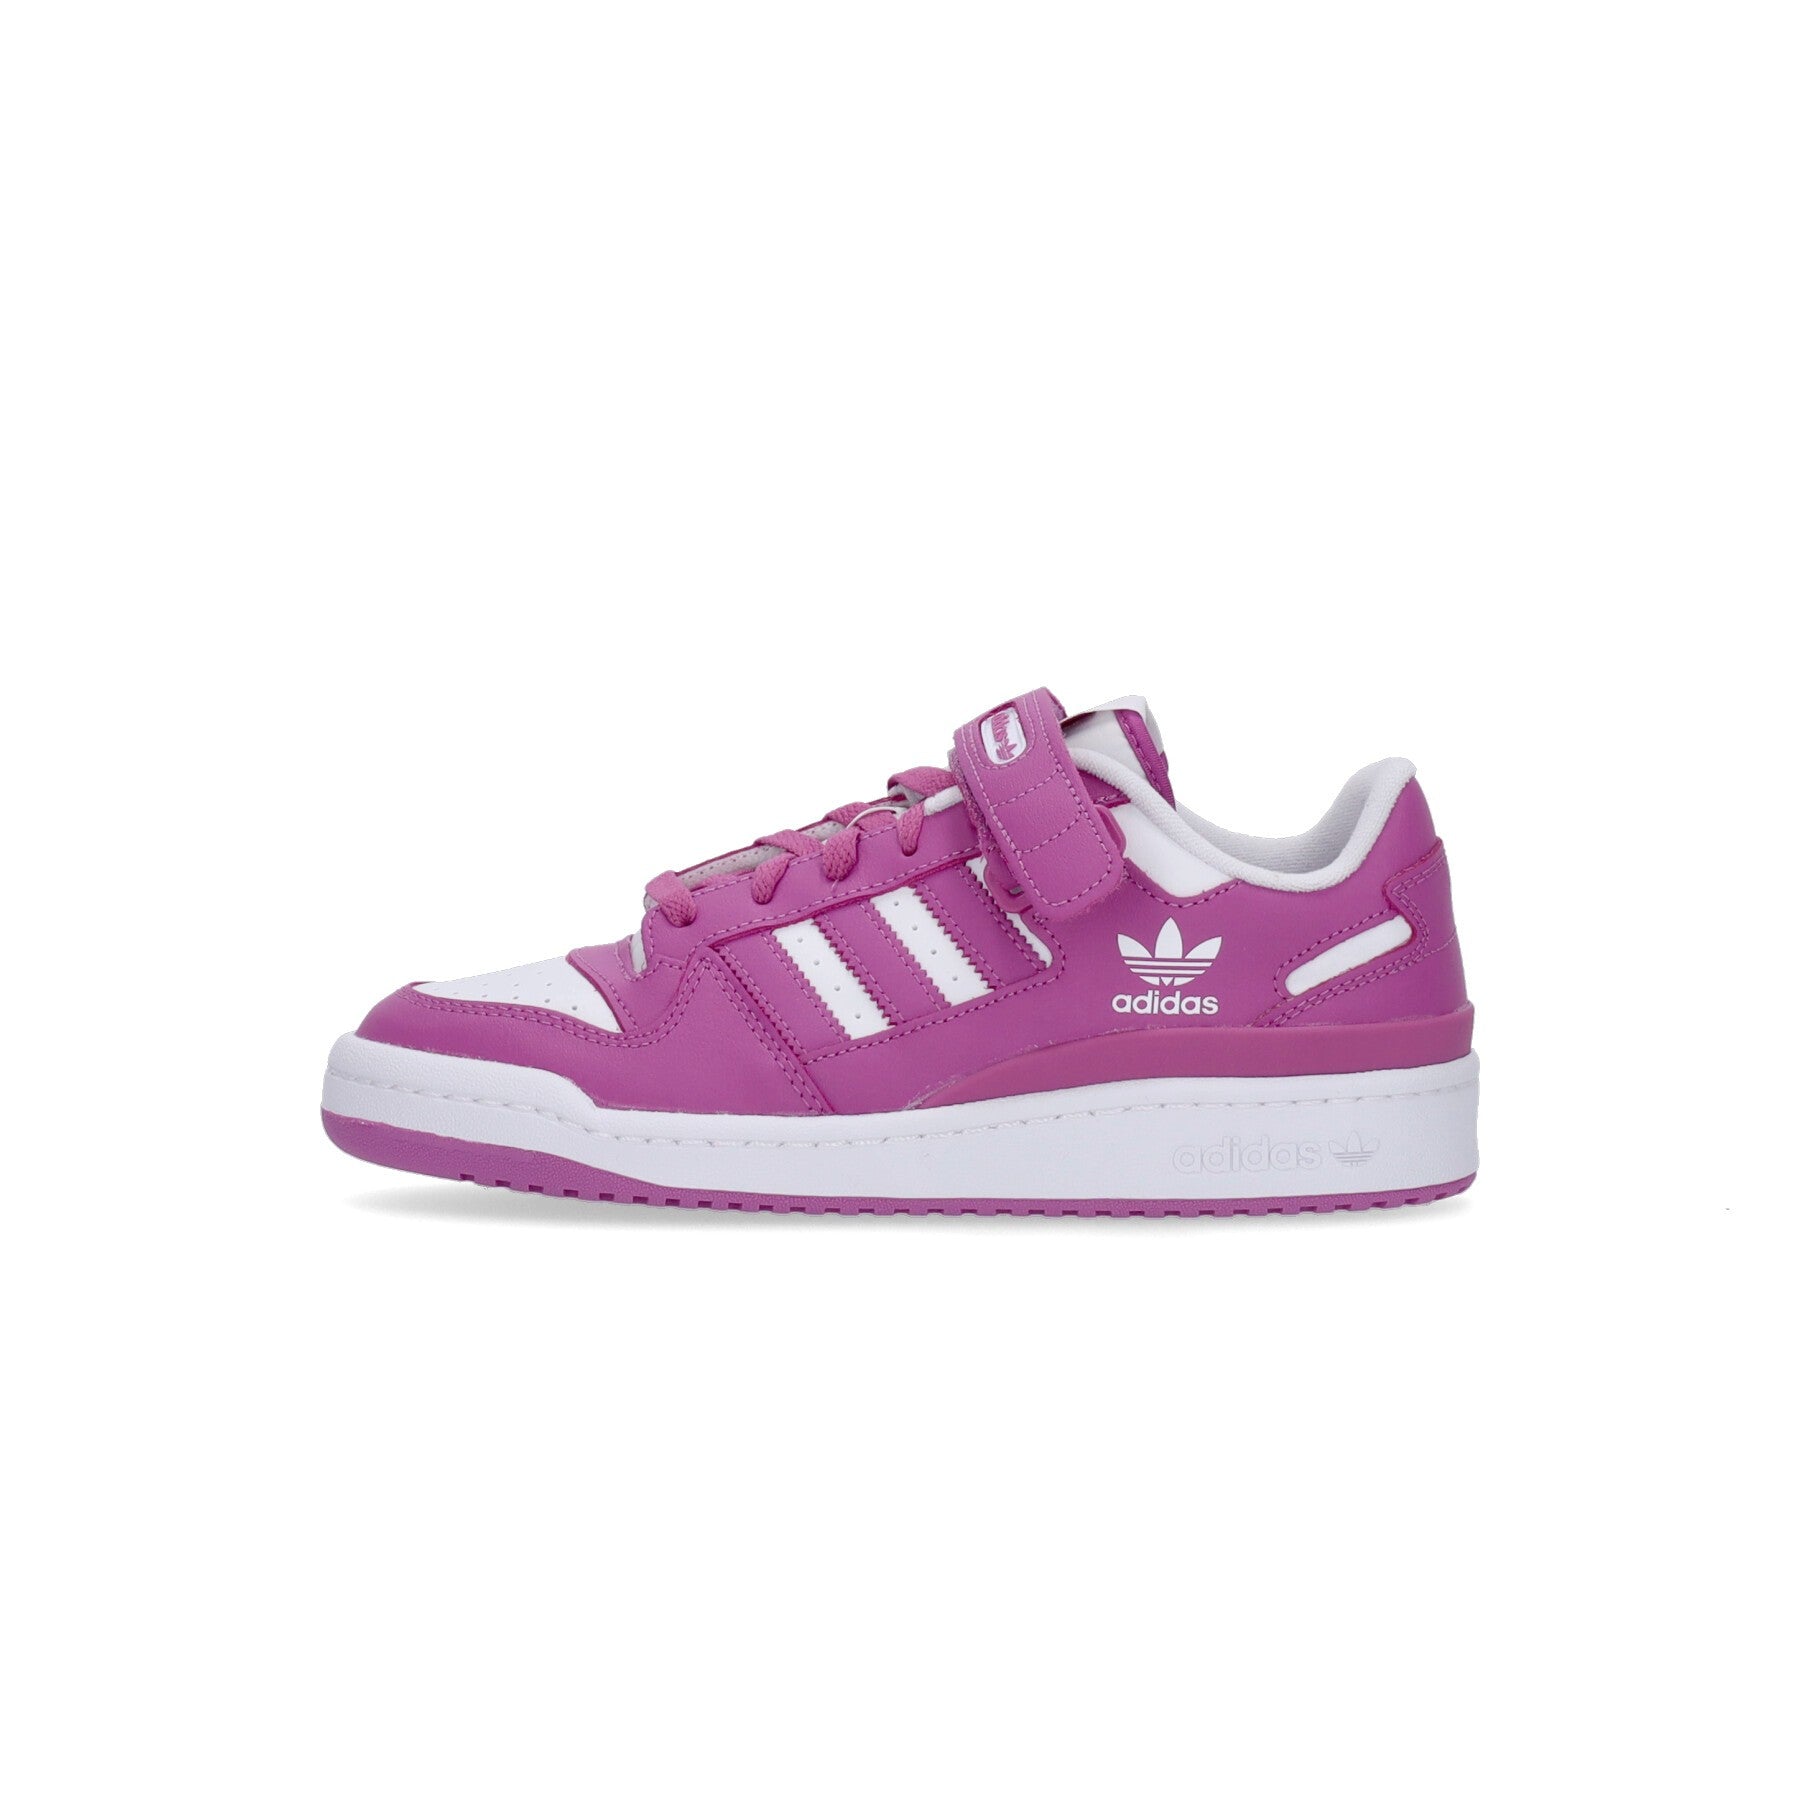 Adidas, Scarpa Bassa Uomo Forum Low, Cloud White/semi Purple/cloud White